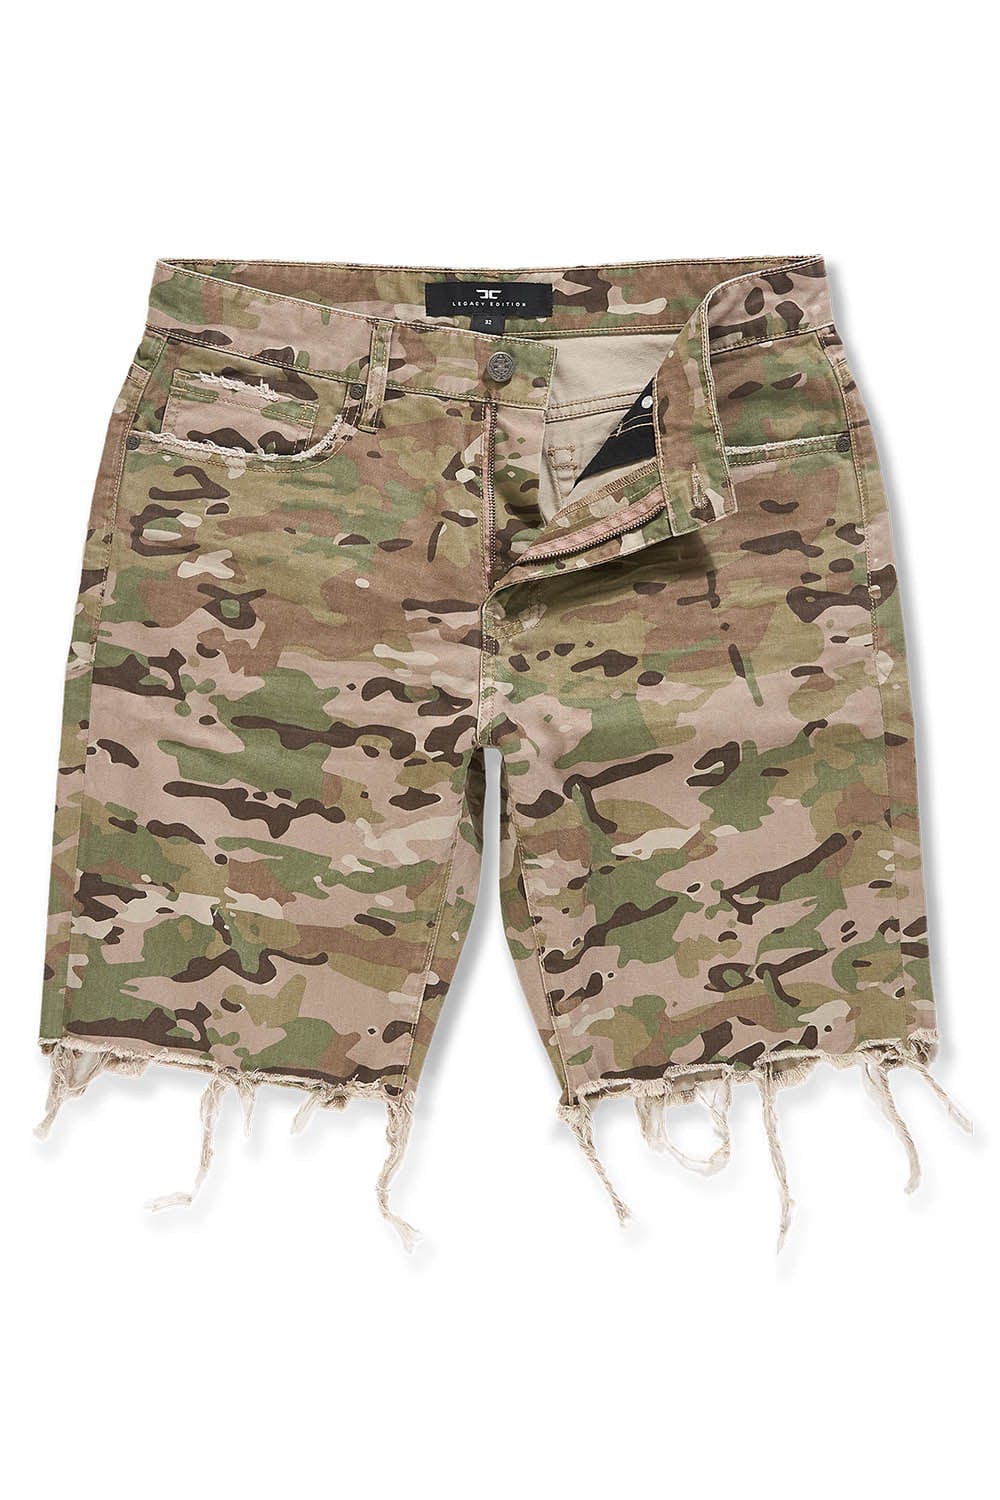 Jordan Craig Retro - Infantry Denim Shorts (Camo 2.0)